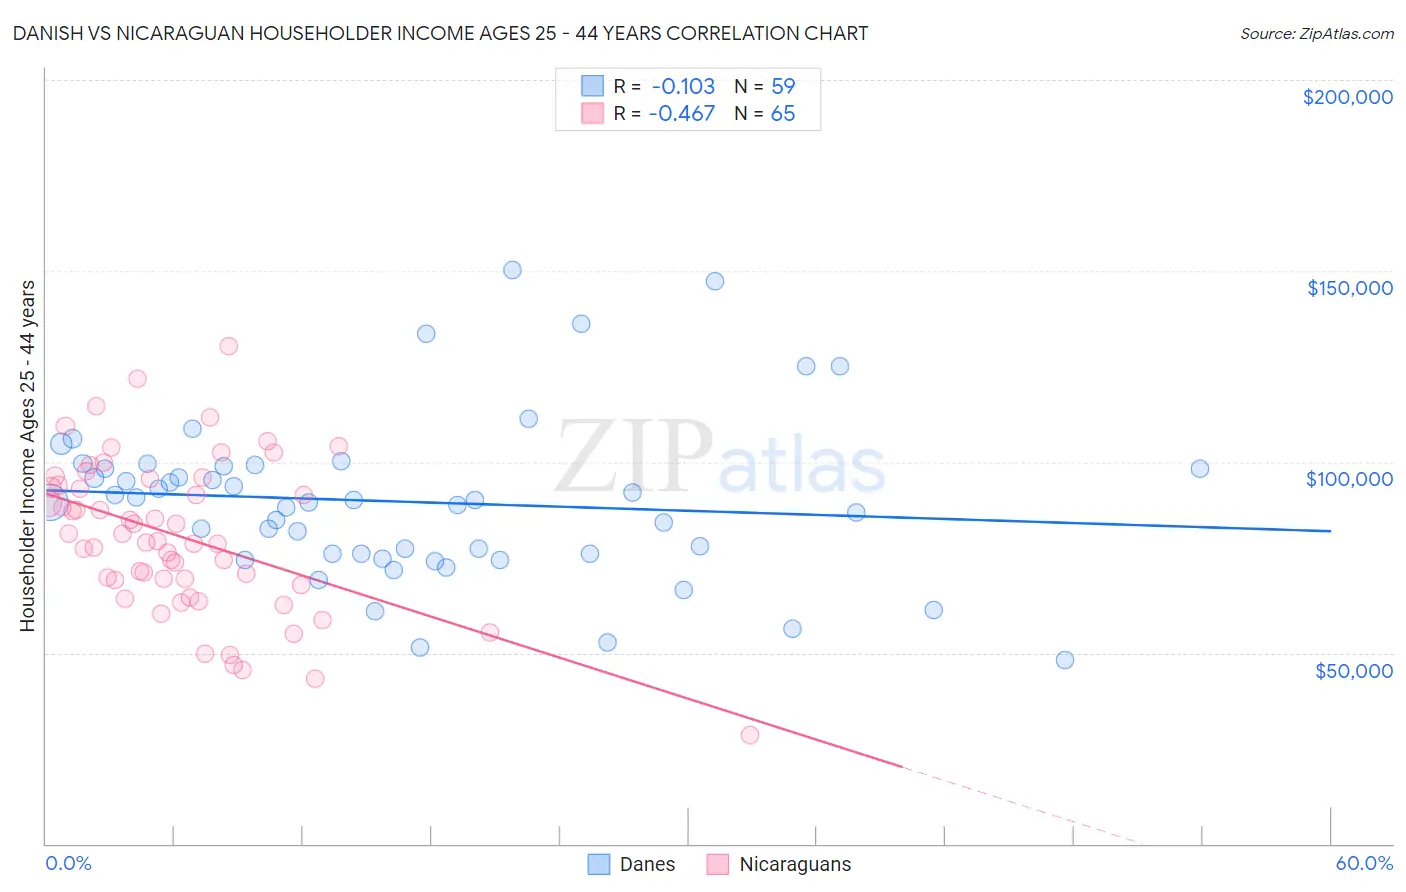 Danish vs Nicaraguan Householder Income Ages 25 - 44 years